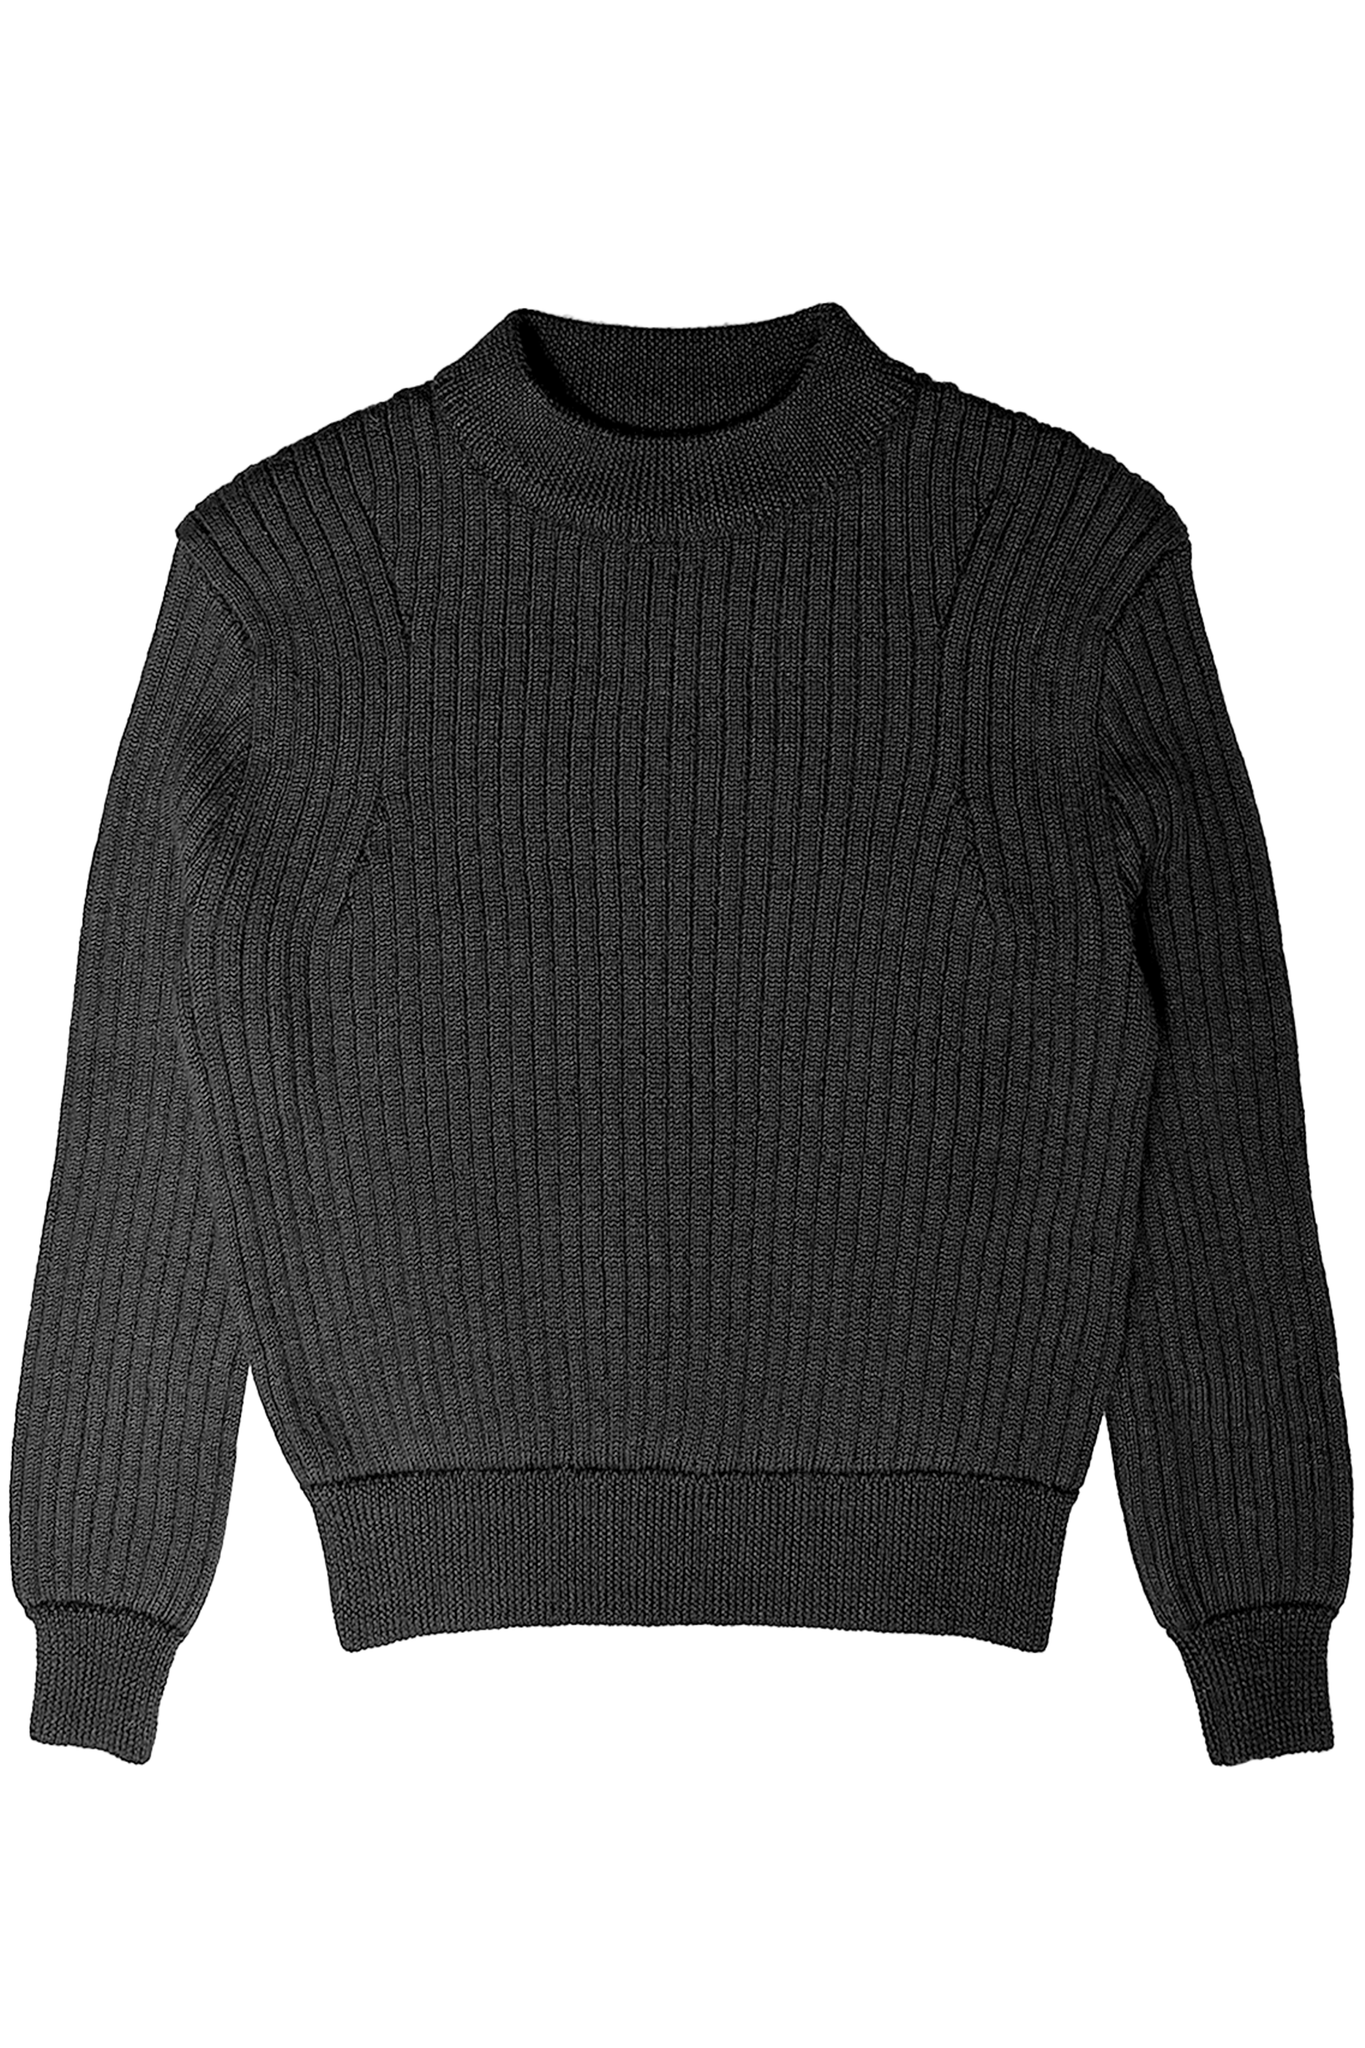 Foundation Sweater *LIMITED*EDITION* Un-dyed Black Alpaca by 4 in #alpaca sweater #blackalpaca